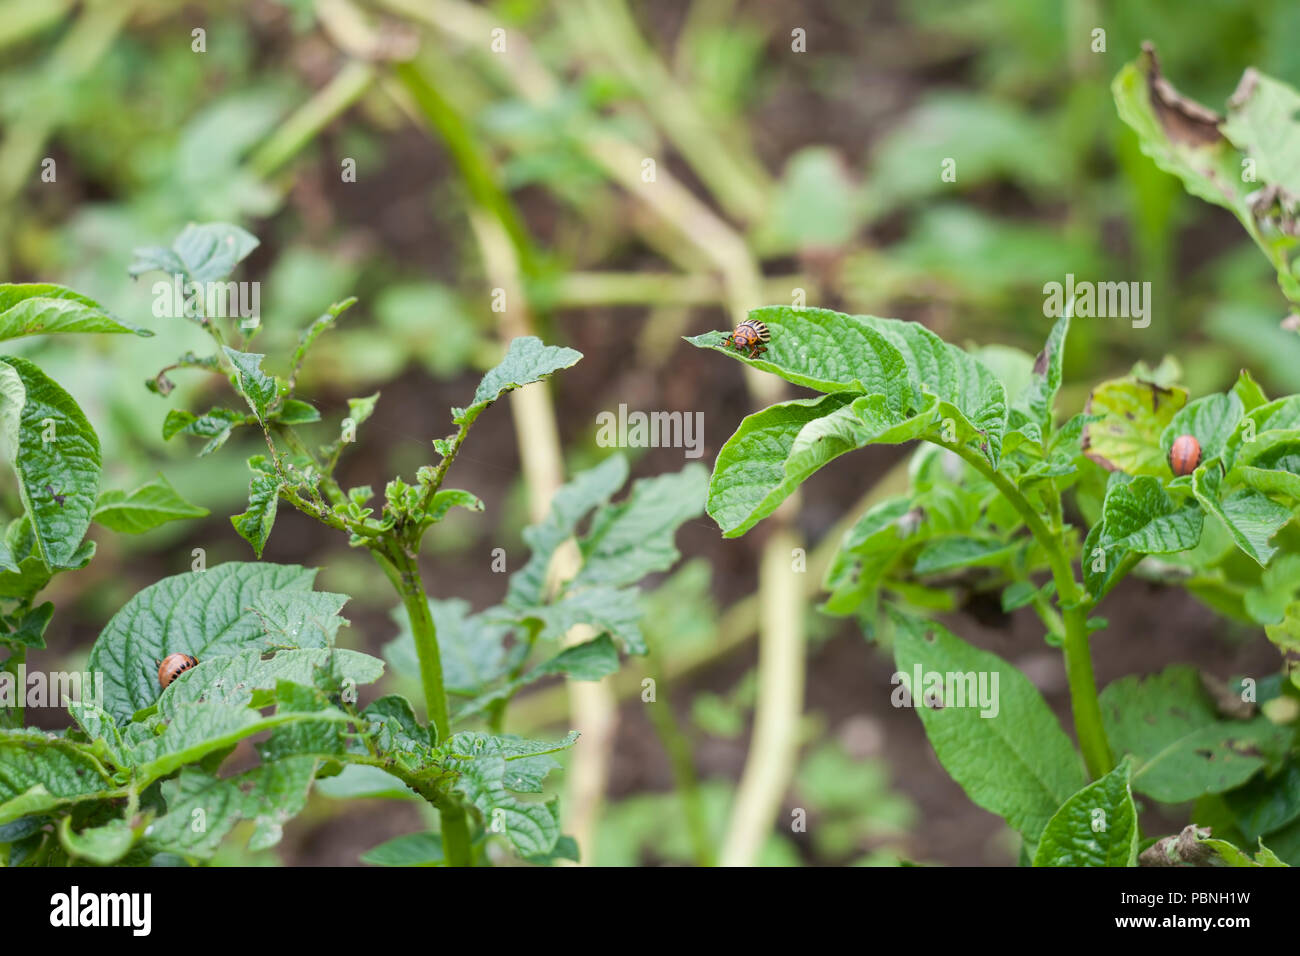 potato bug eating the plant Stock Photo